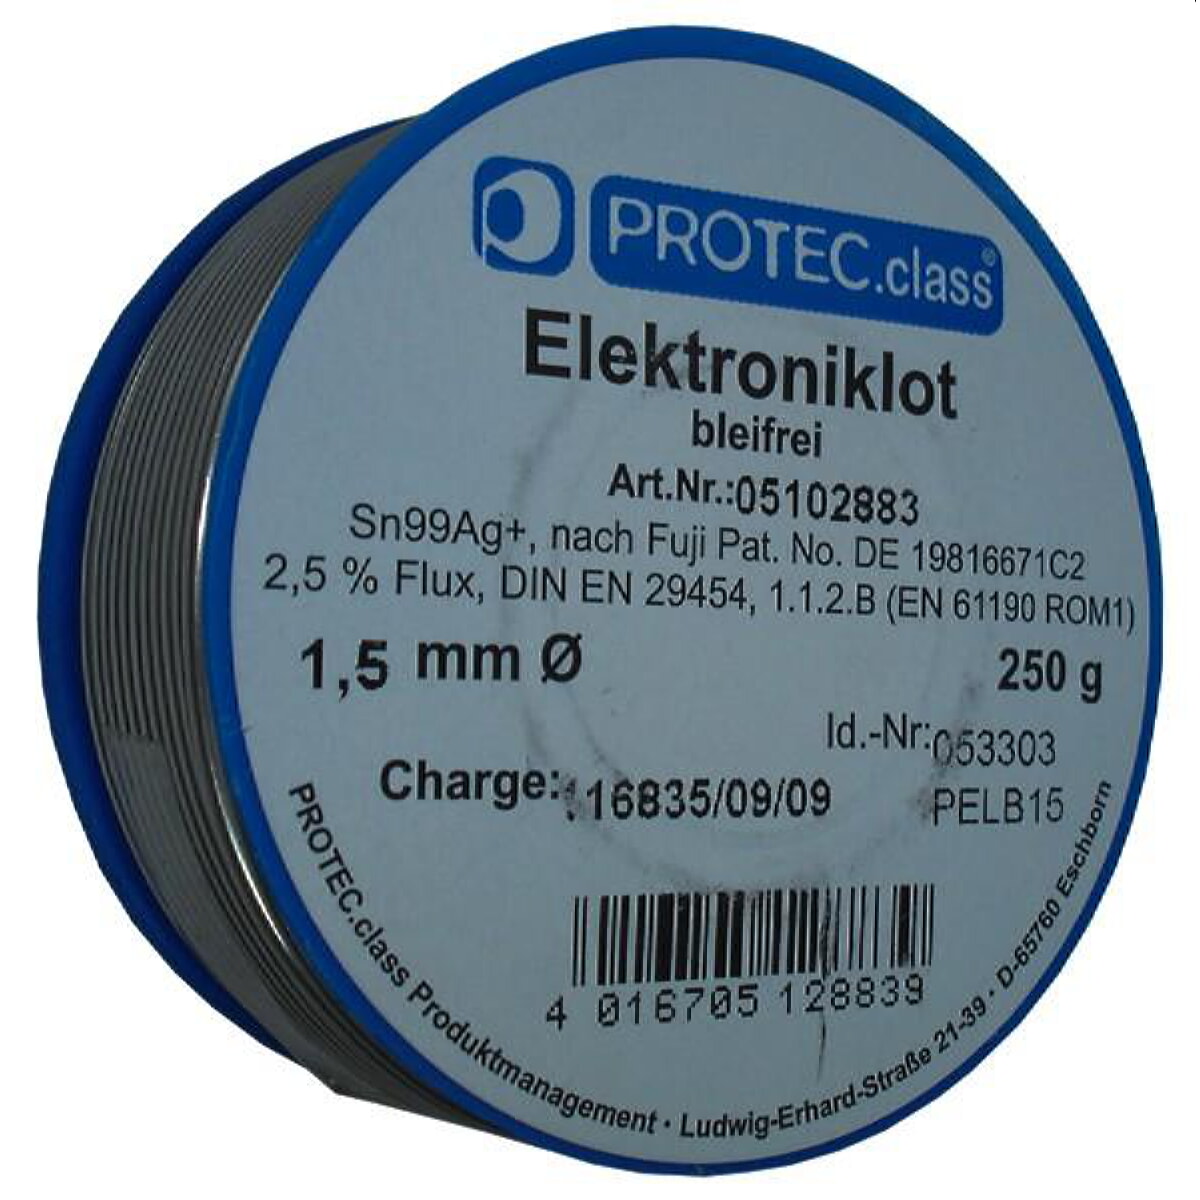 PROTEC.class Elektroniklot bleifrei 1mm PELB10 (250 g)